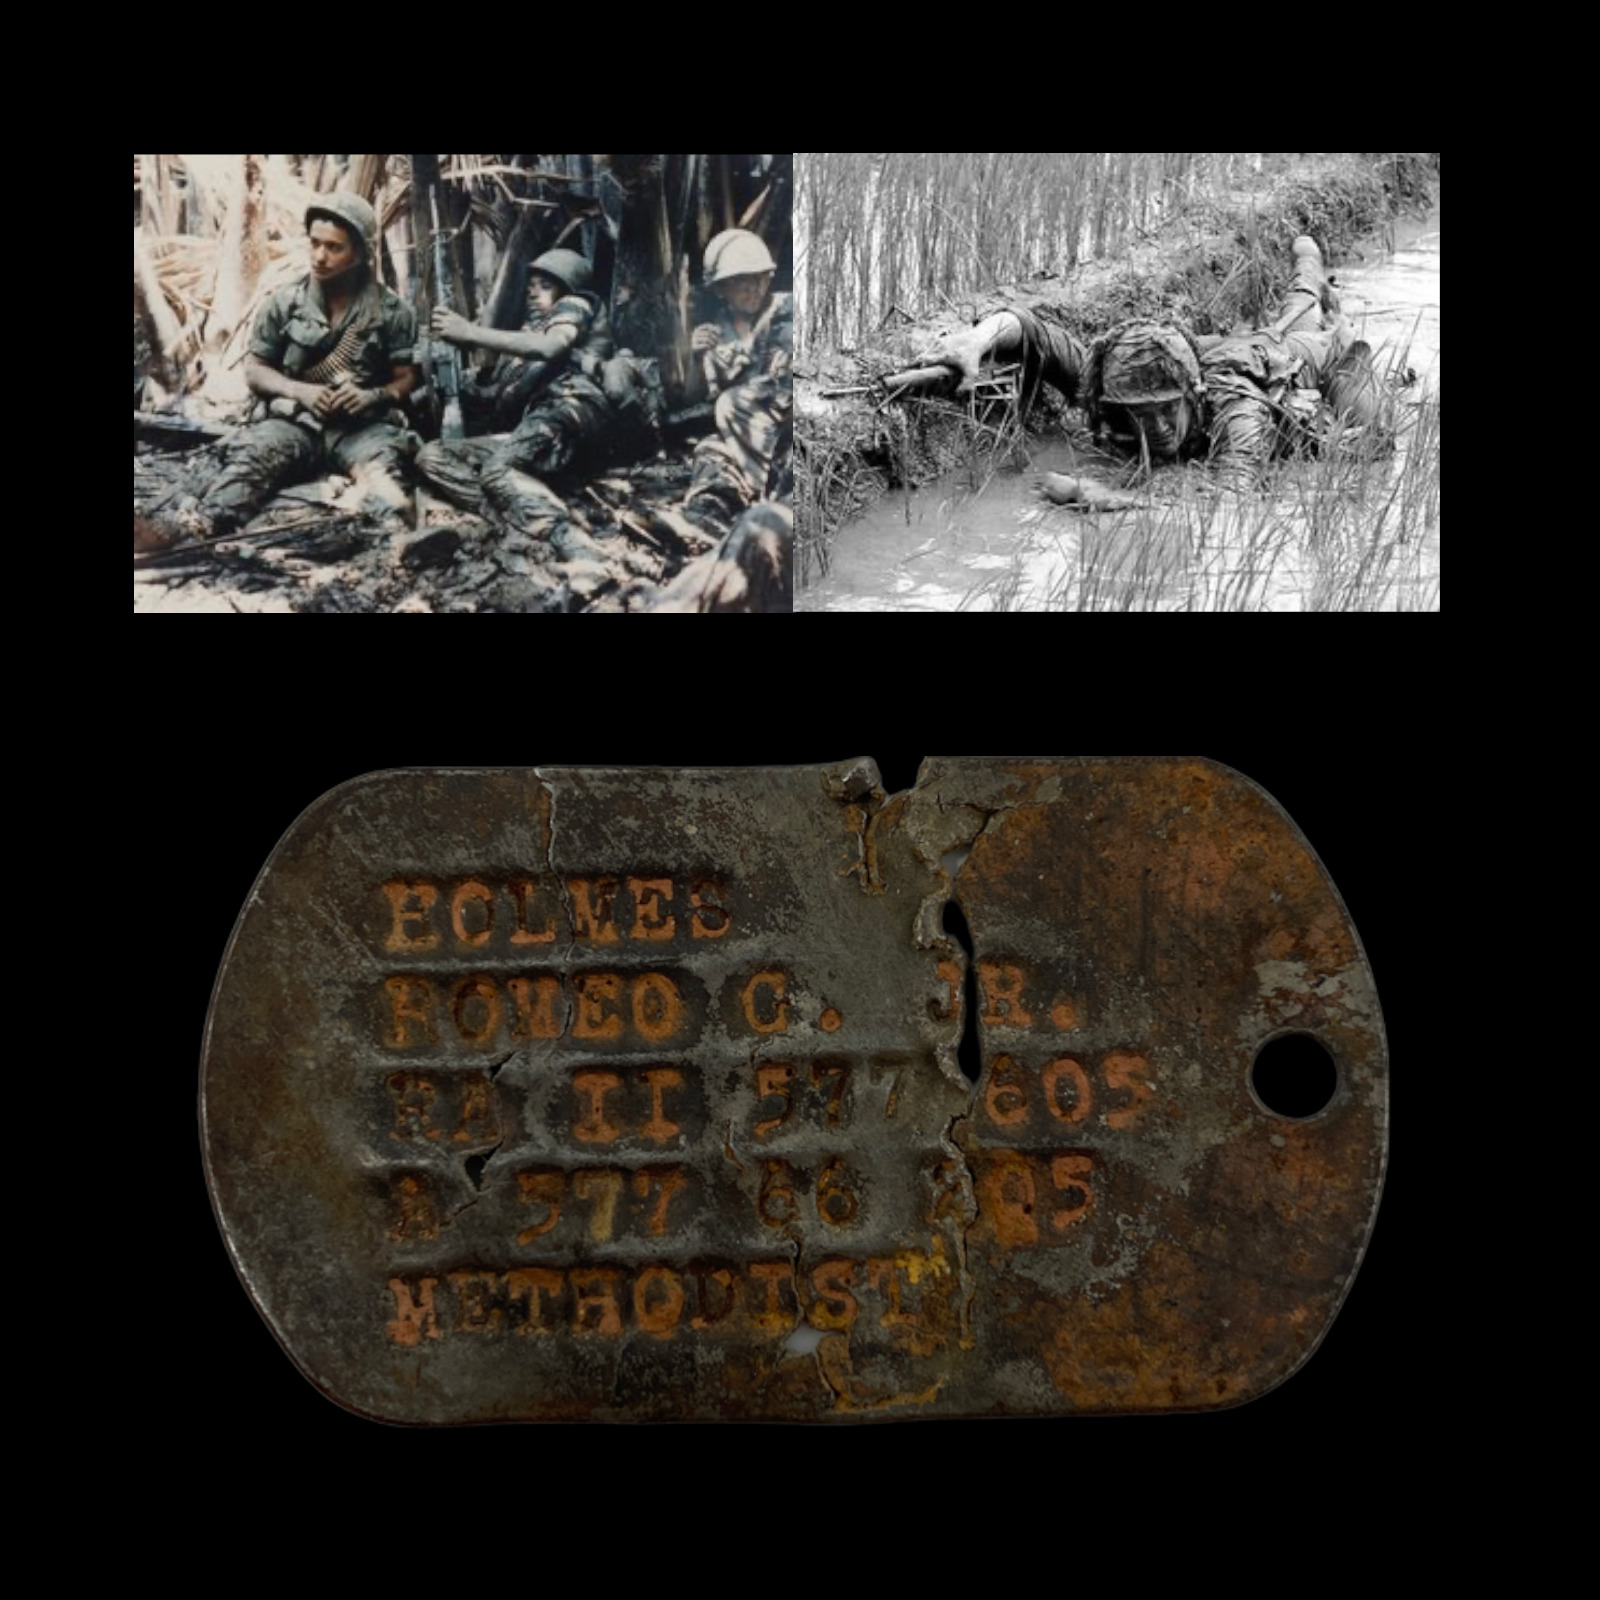 RARE Vietnam War TET OFFENSIVE Rice Paddy Battlefield U.S. Infantry Dog Tag